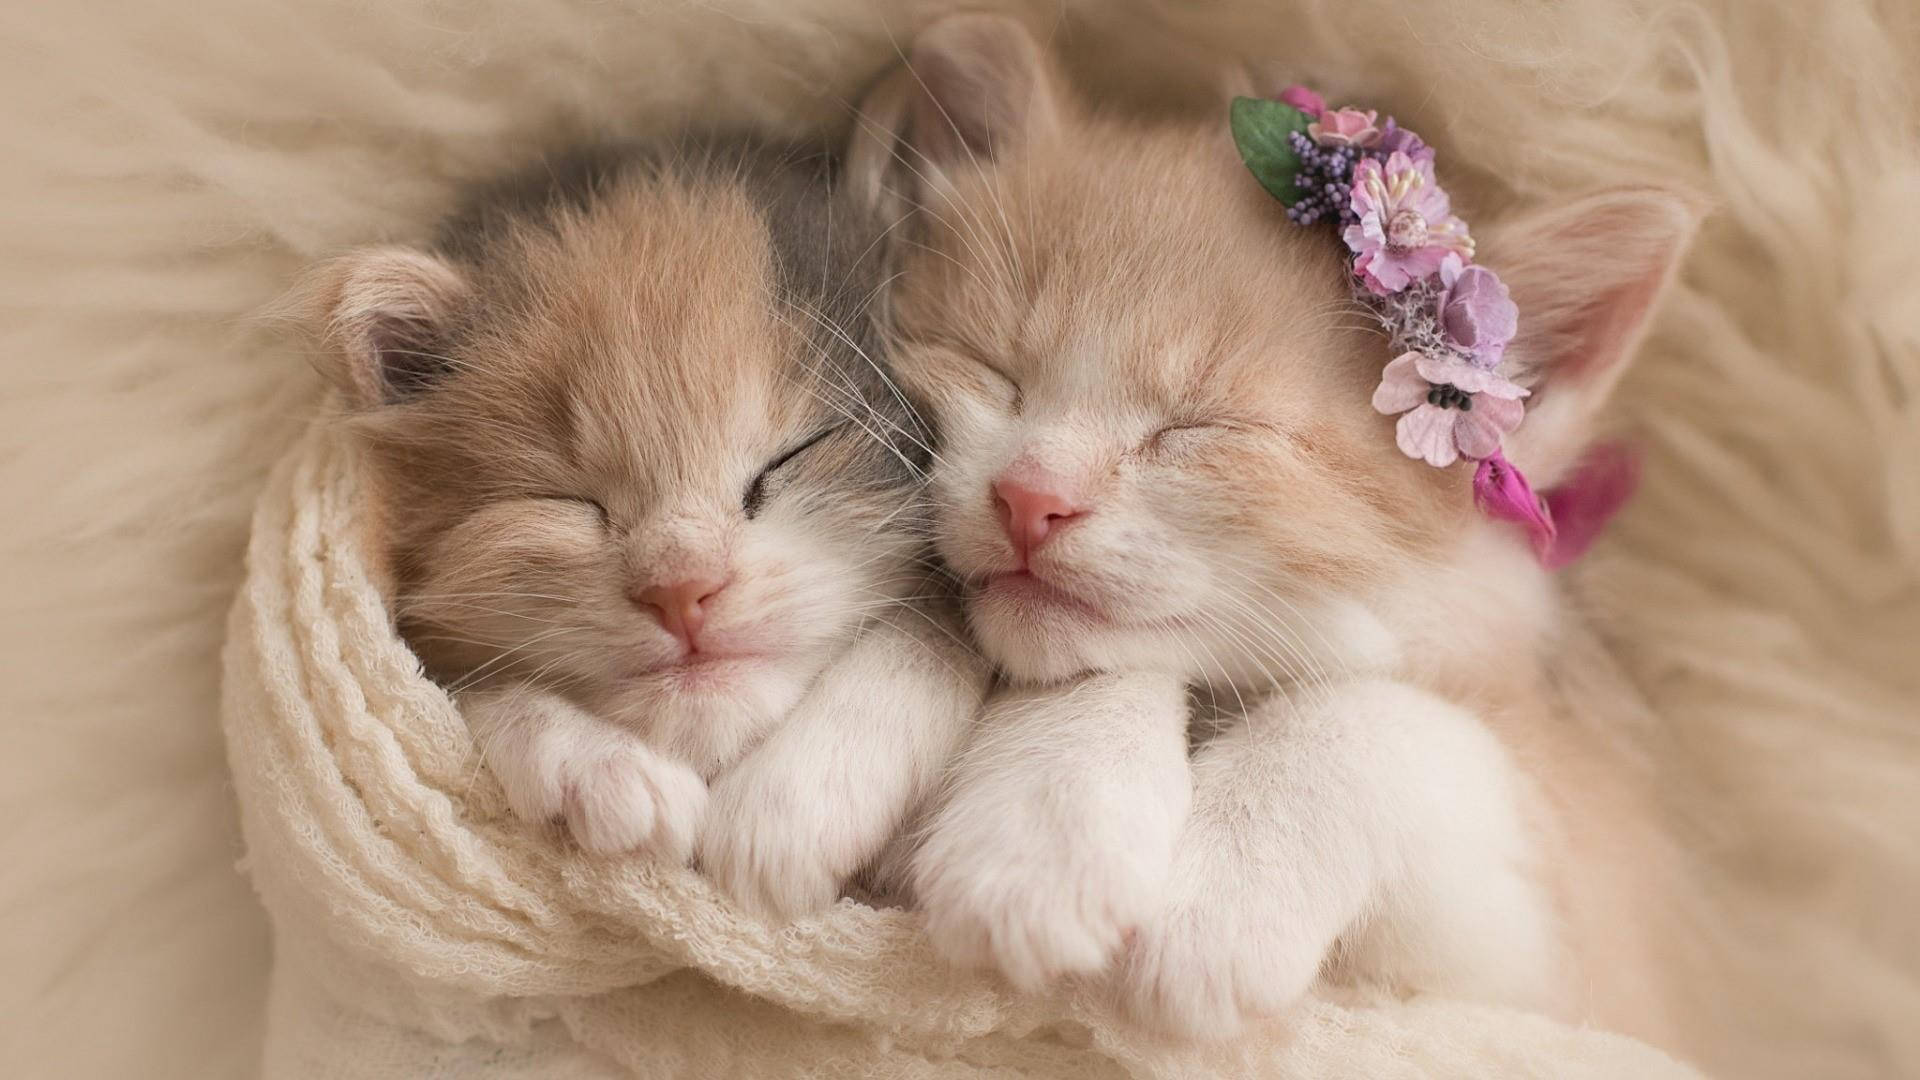 Baby Cats Cuddling Image wallpaper.